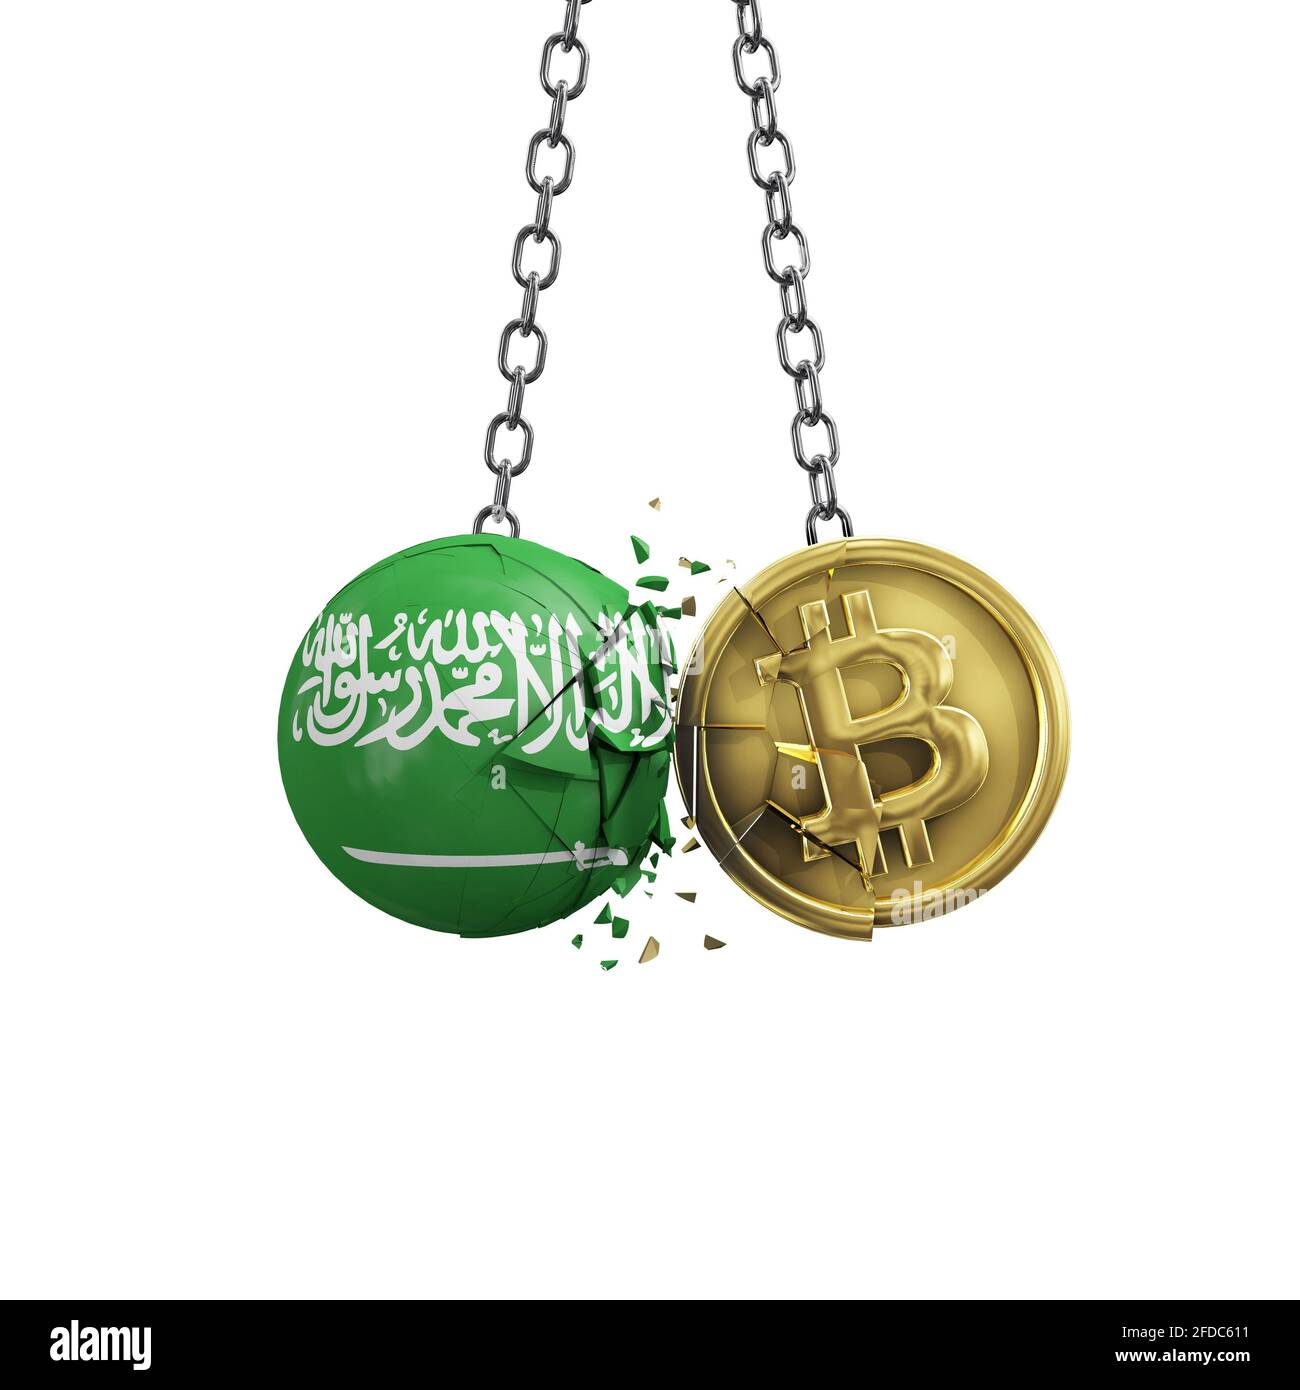 Saudi-Arabiens Flagge zerschlägt in eine goldene Bitcoin-Kryptomünze. 3D-Rendering Stockfoto